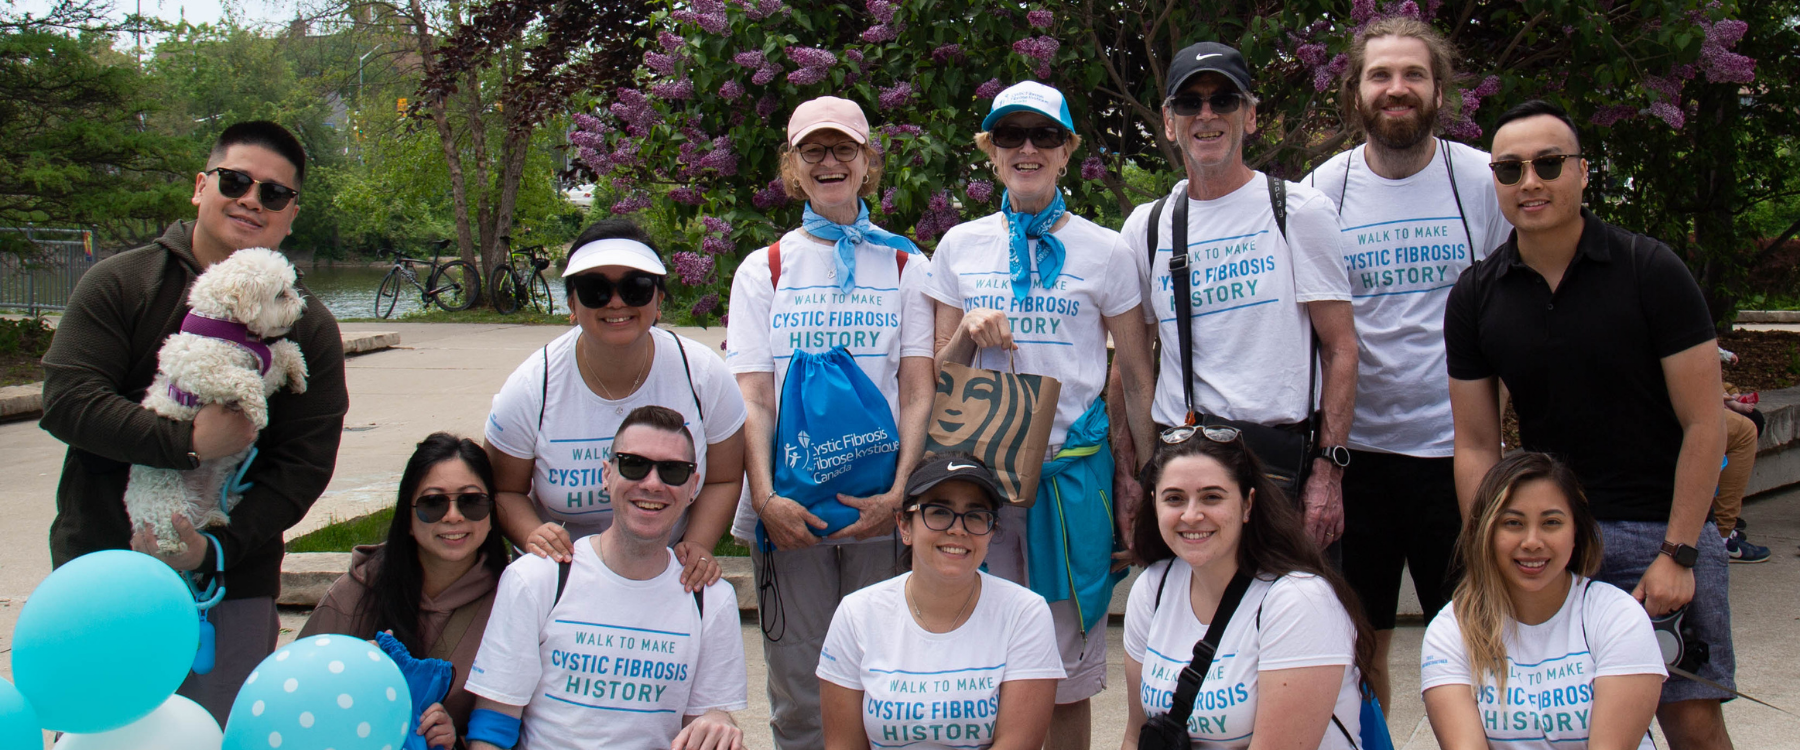 Group of Walk participants wearing Walk to Make Cystic Fibrosis History t-shirts